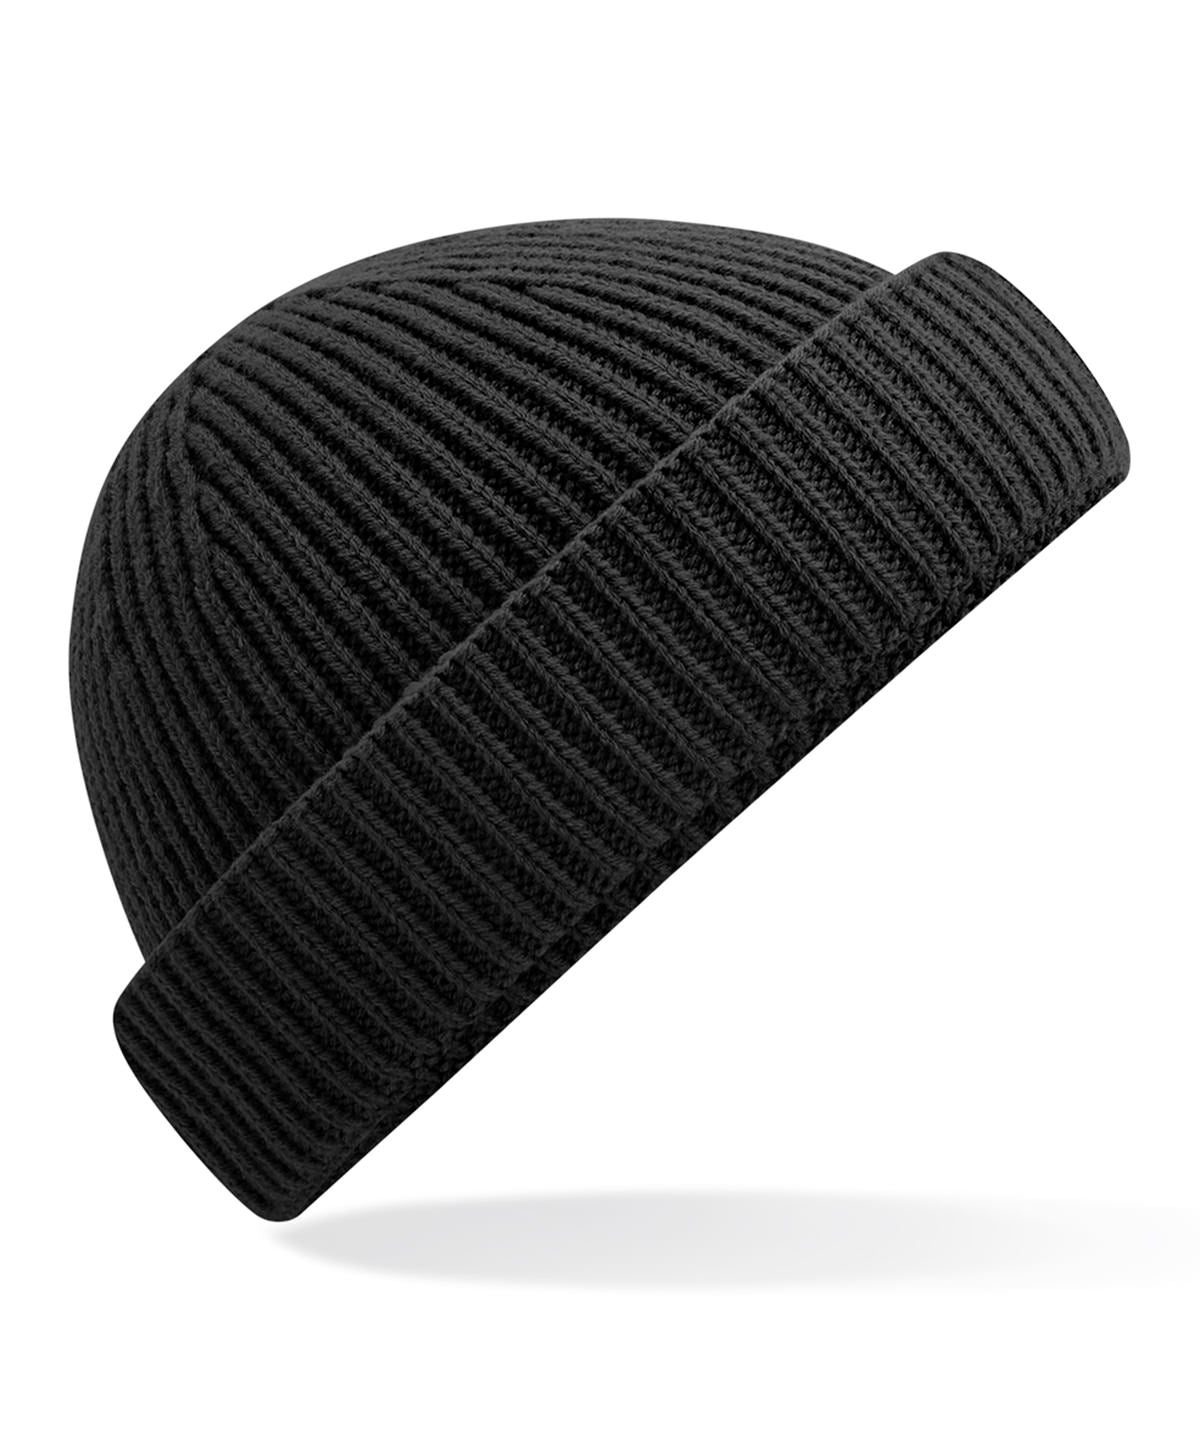 Personalised Hats - Black Beechfield Harbour beanie